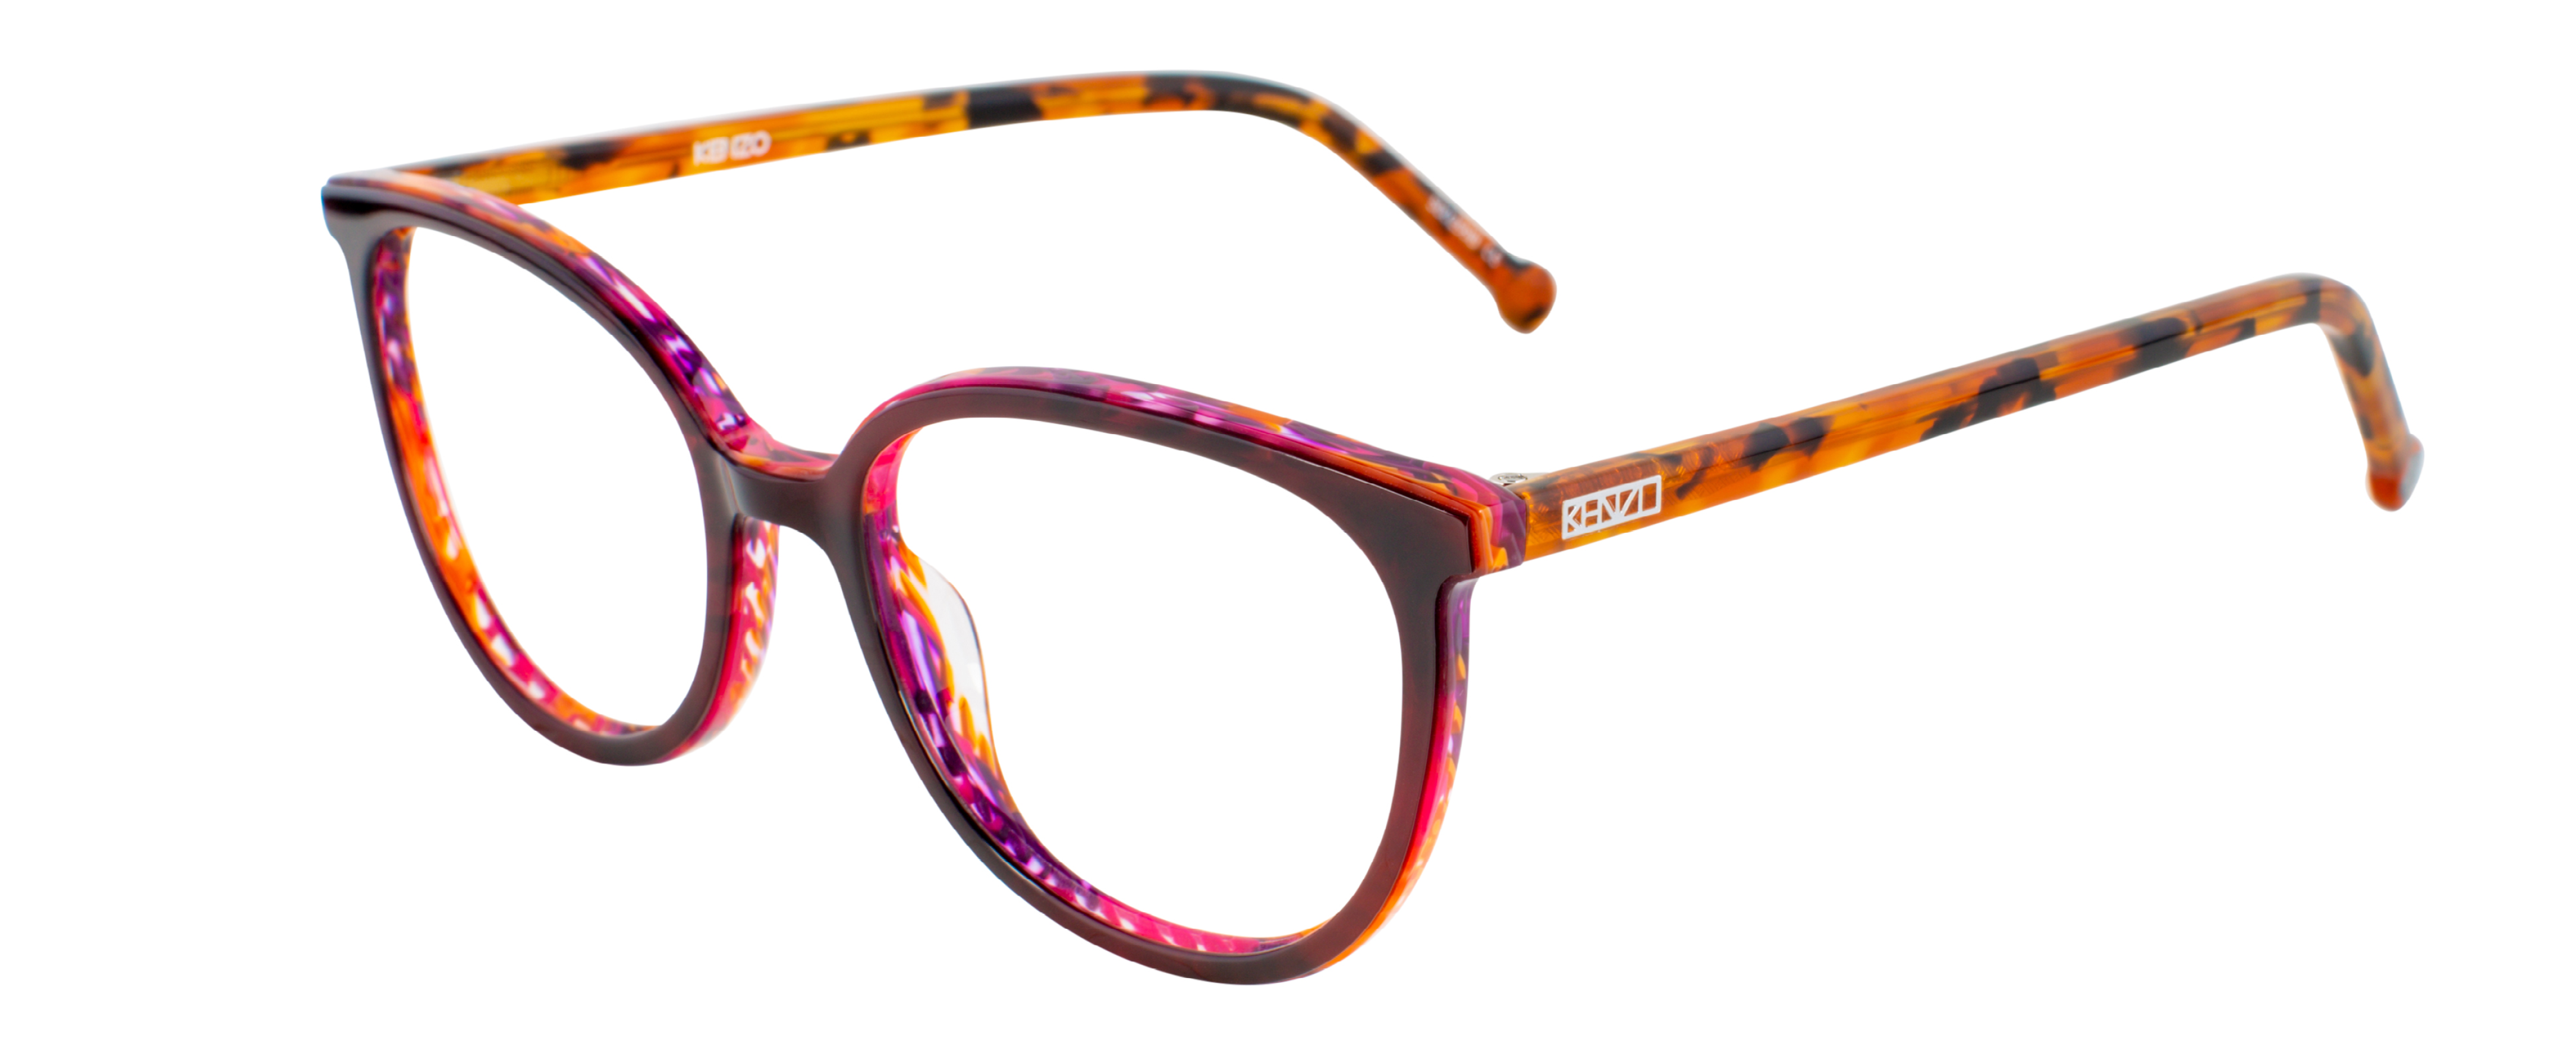 KENZO eyewear – #LoveGlasses